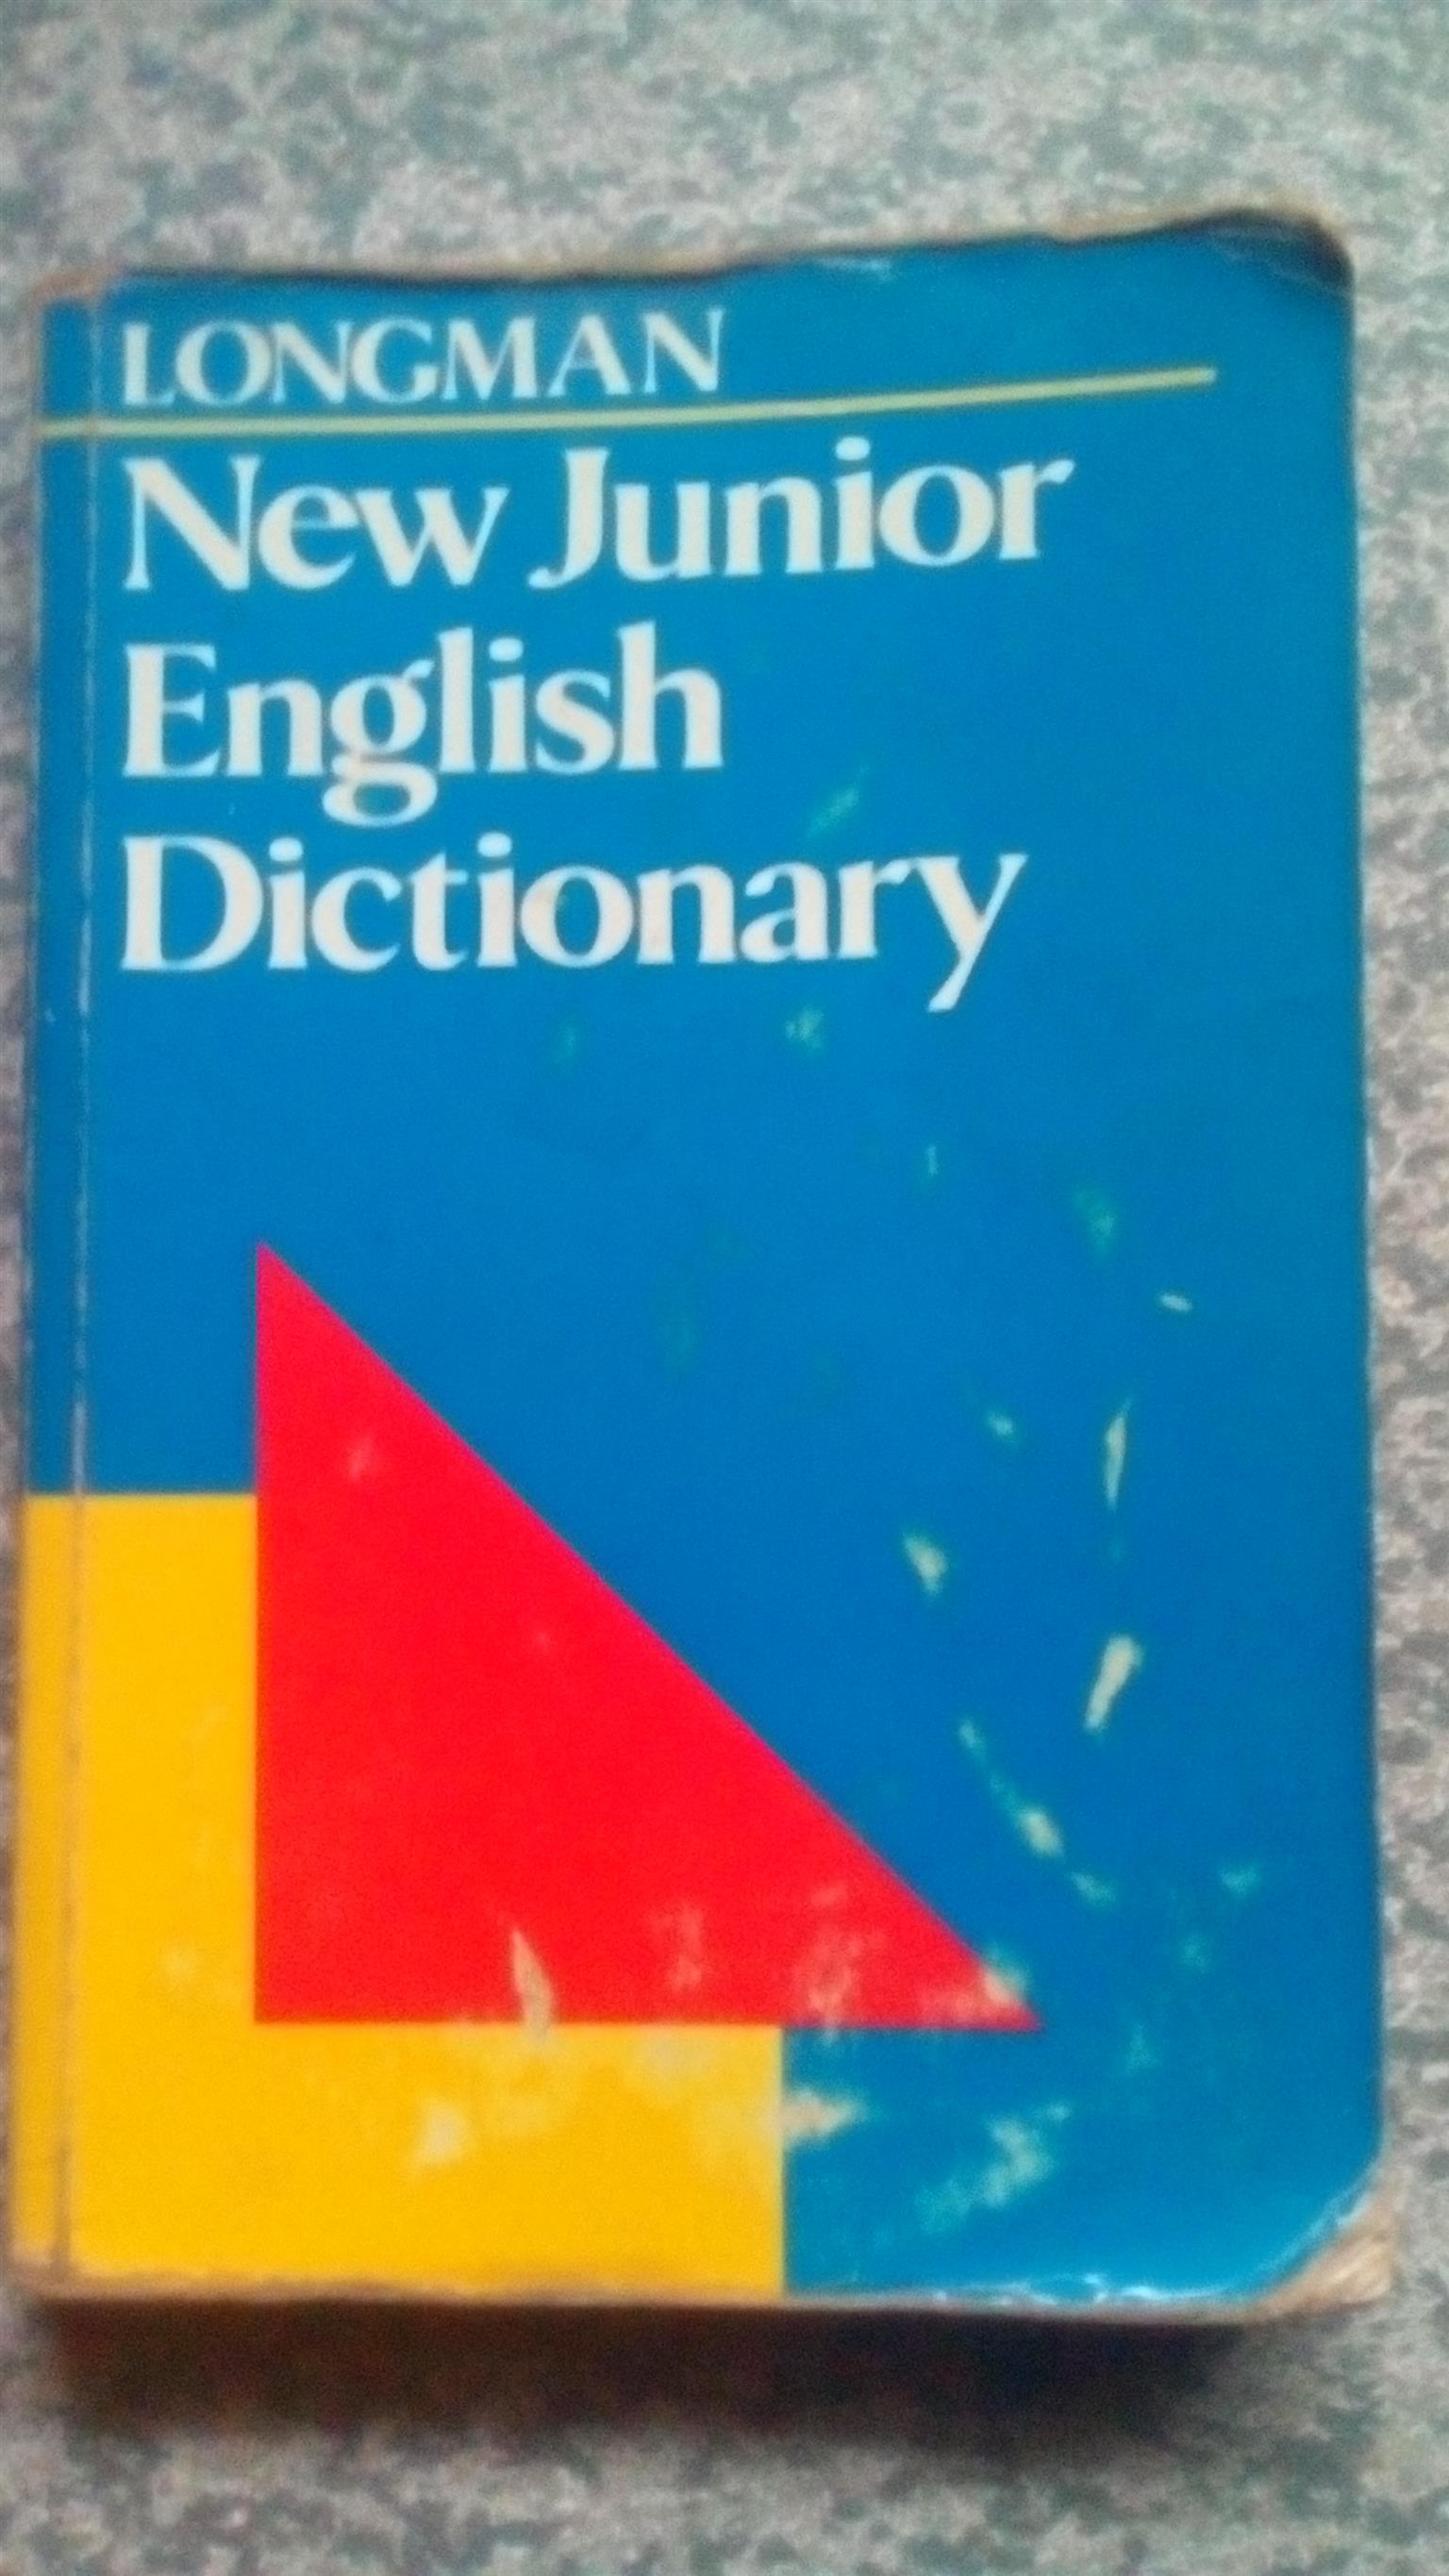 Longman New Junior English Dictionary by Della Summers